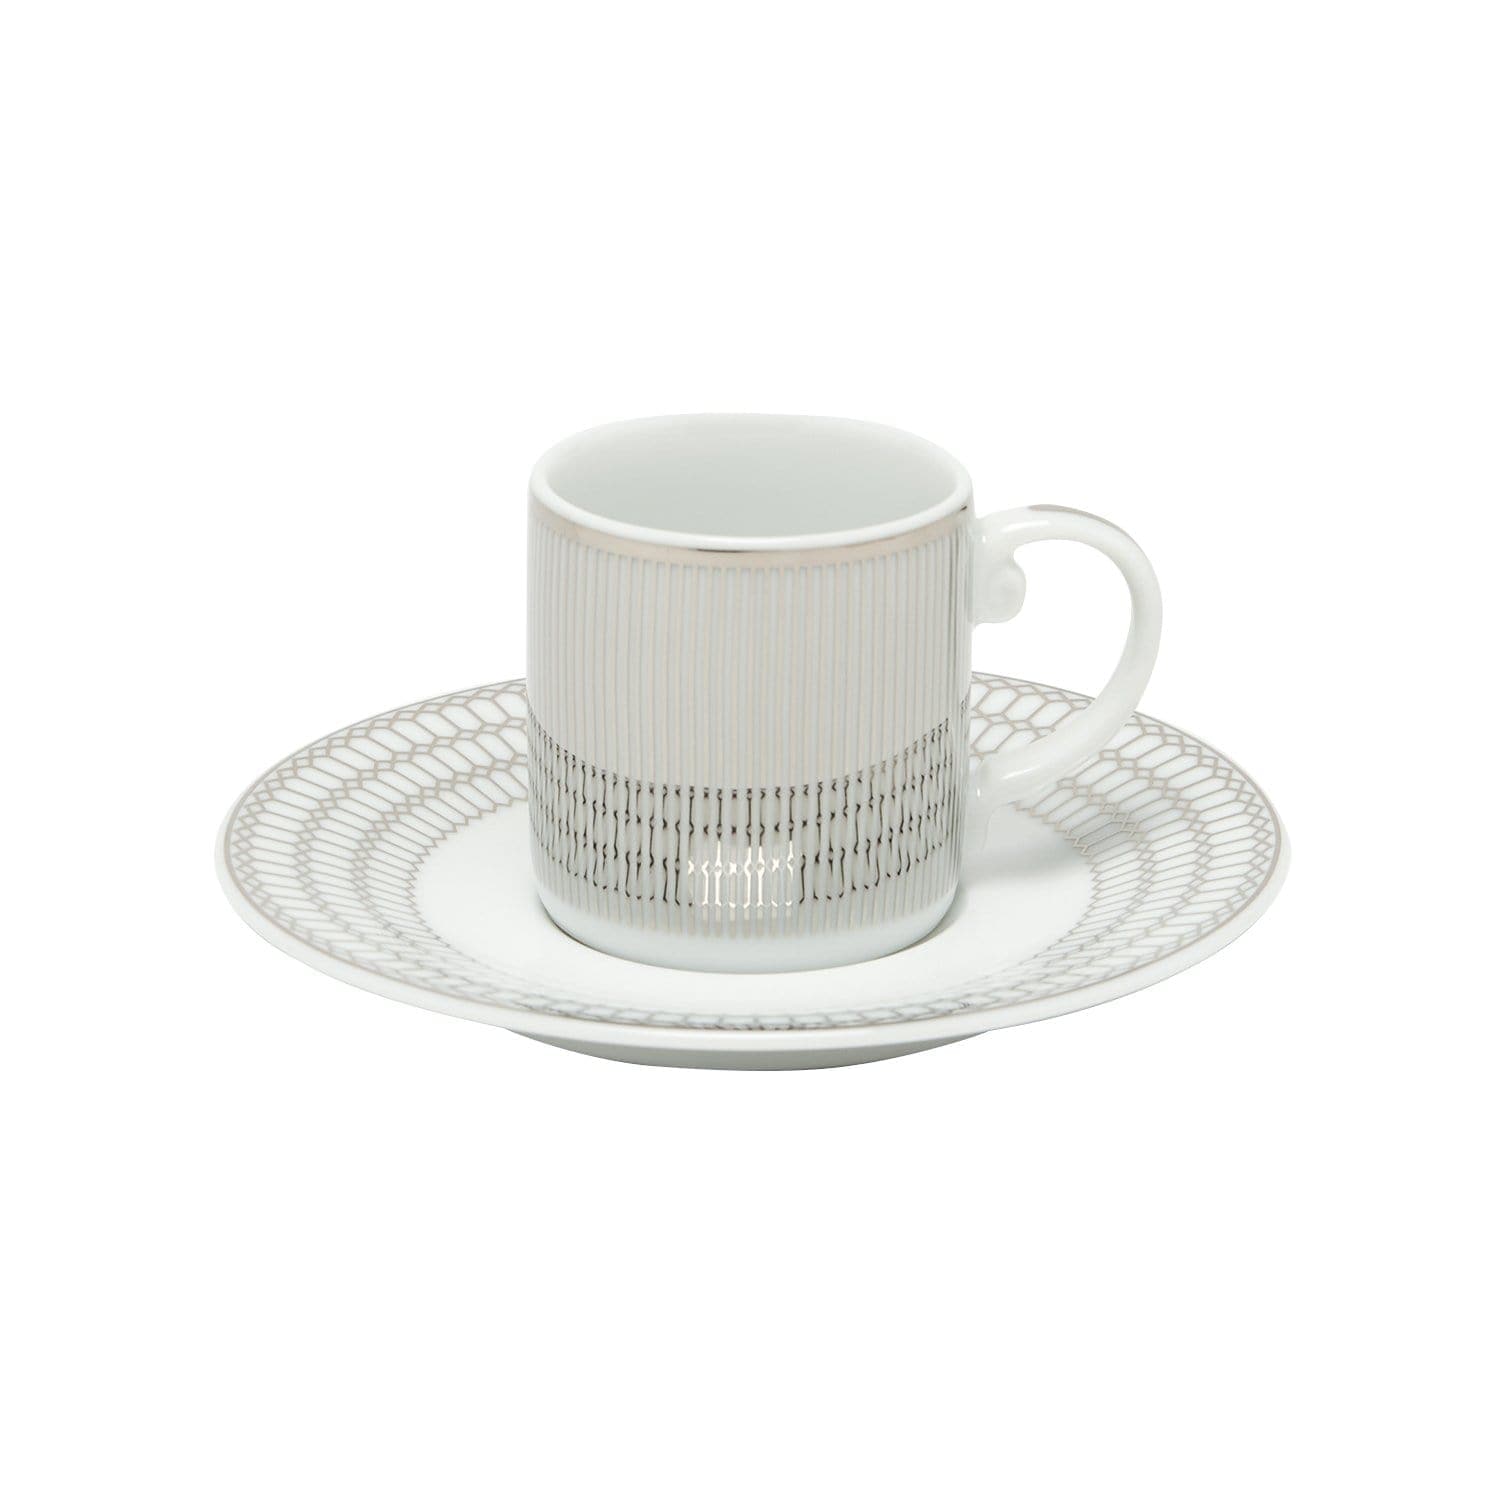 DANKOTUWA FOSTER PLATINUM DEMITASSE COFFEE CUP AND SAUCER SET - FOST-11792/693/6-P